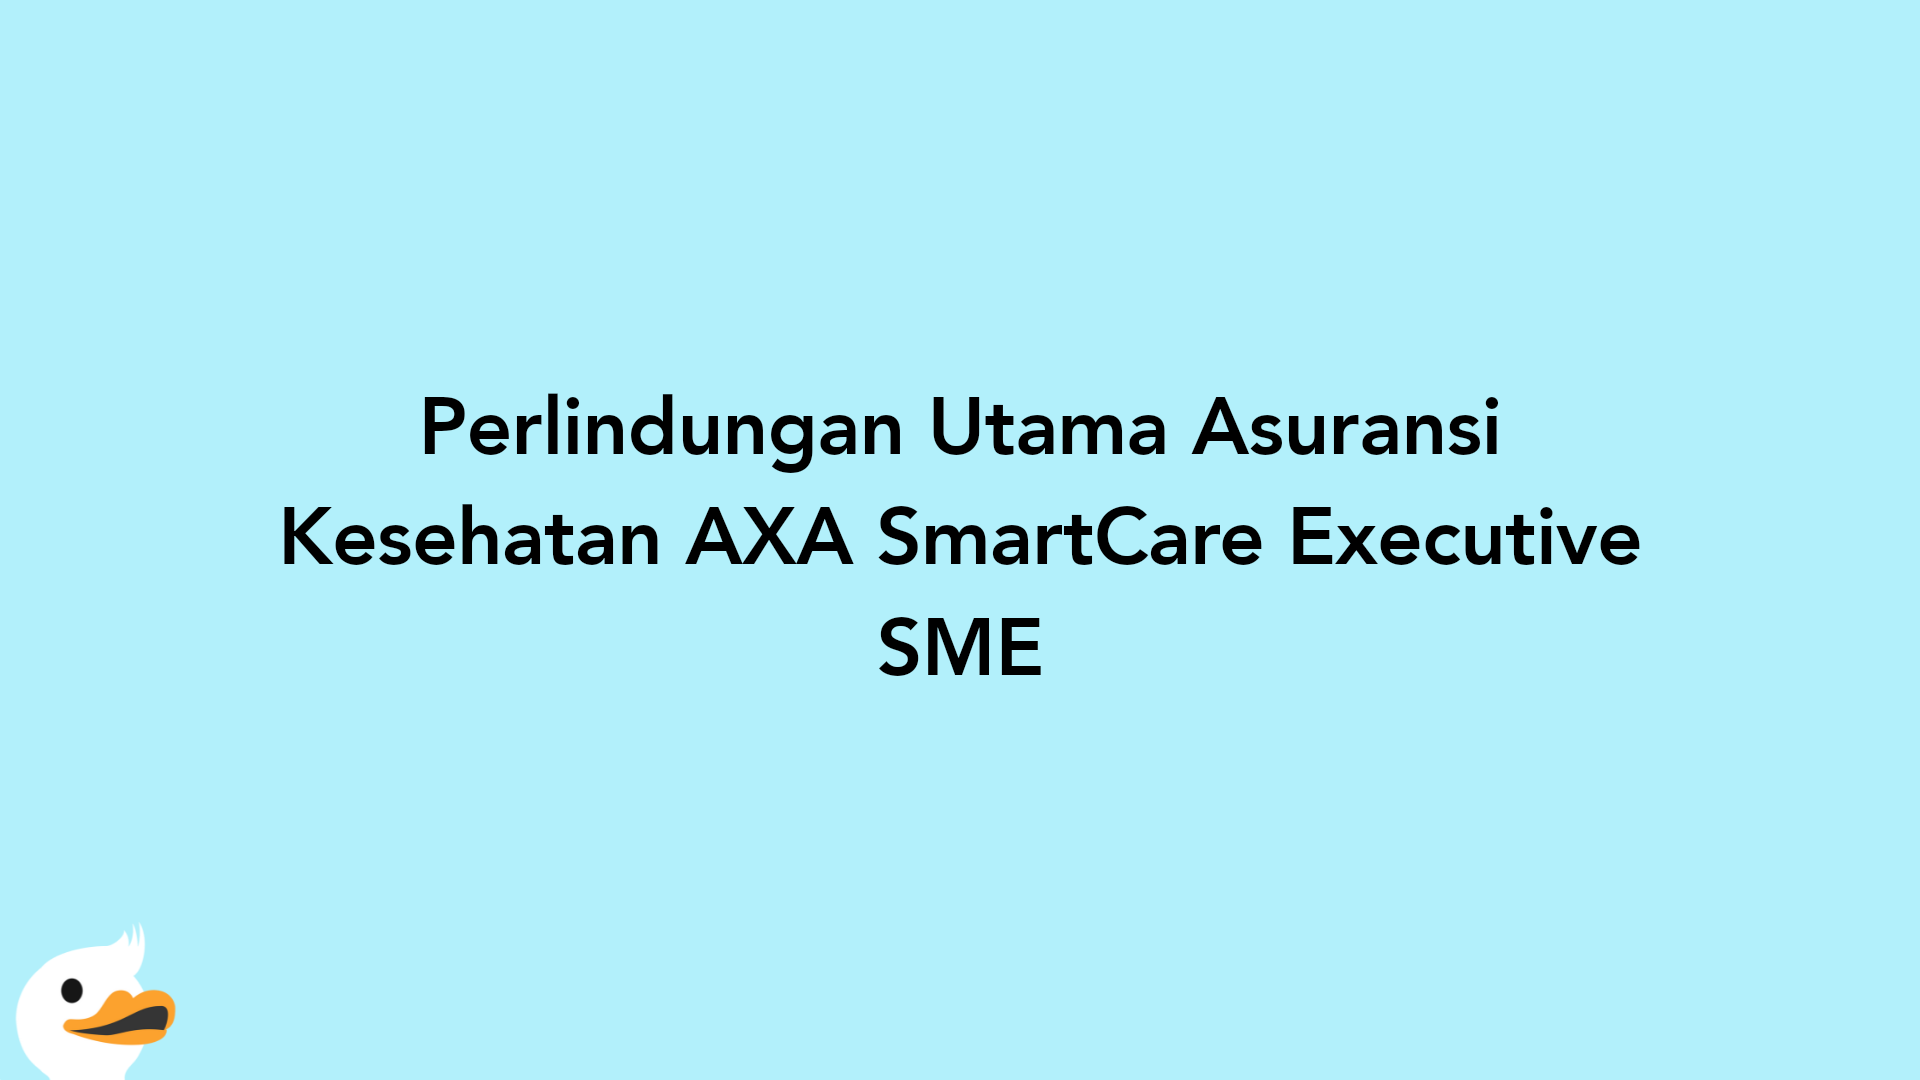 Perlindungan Utama Asuransi Kesehatan AXA SmartCare Executive SME